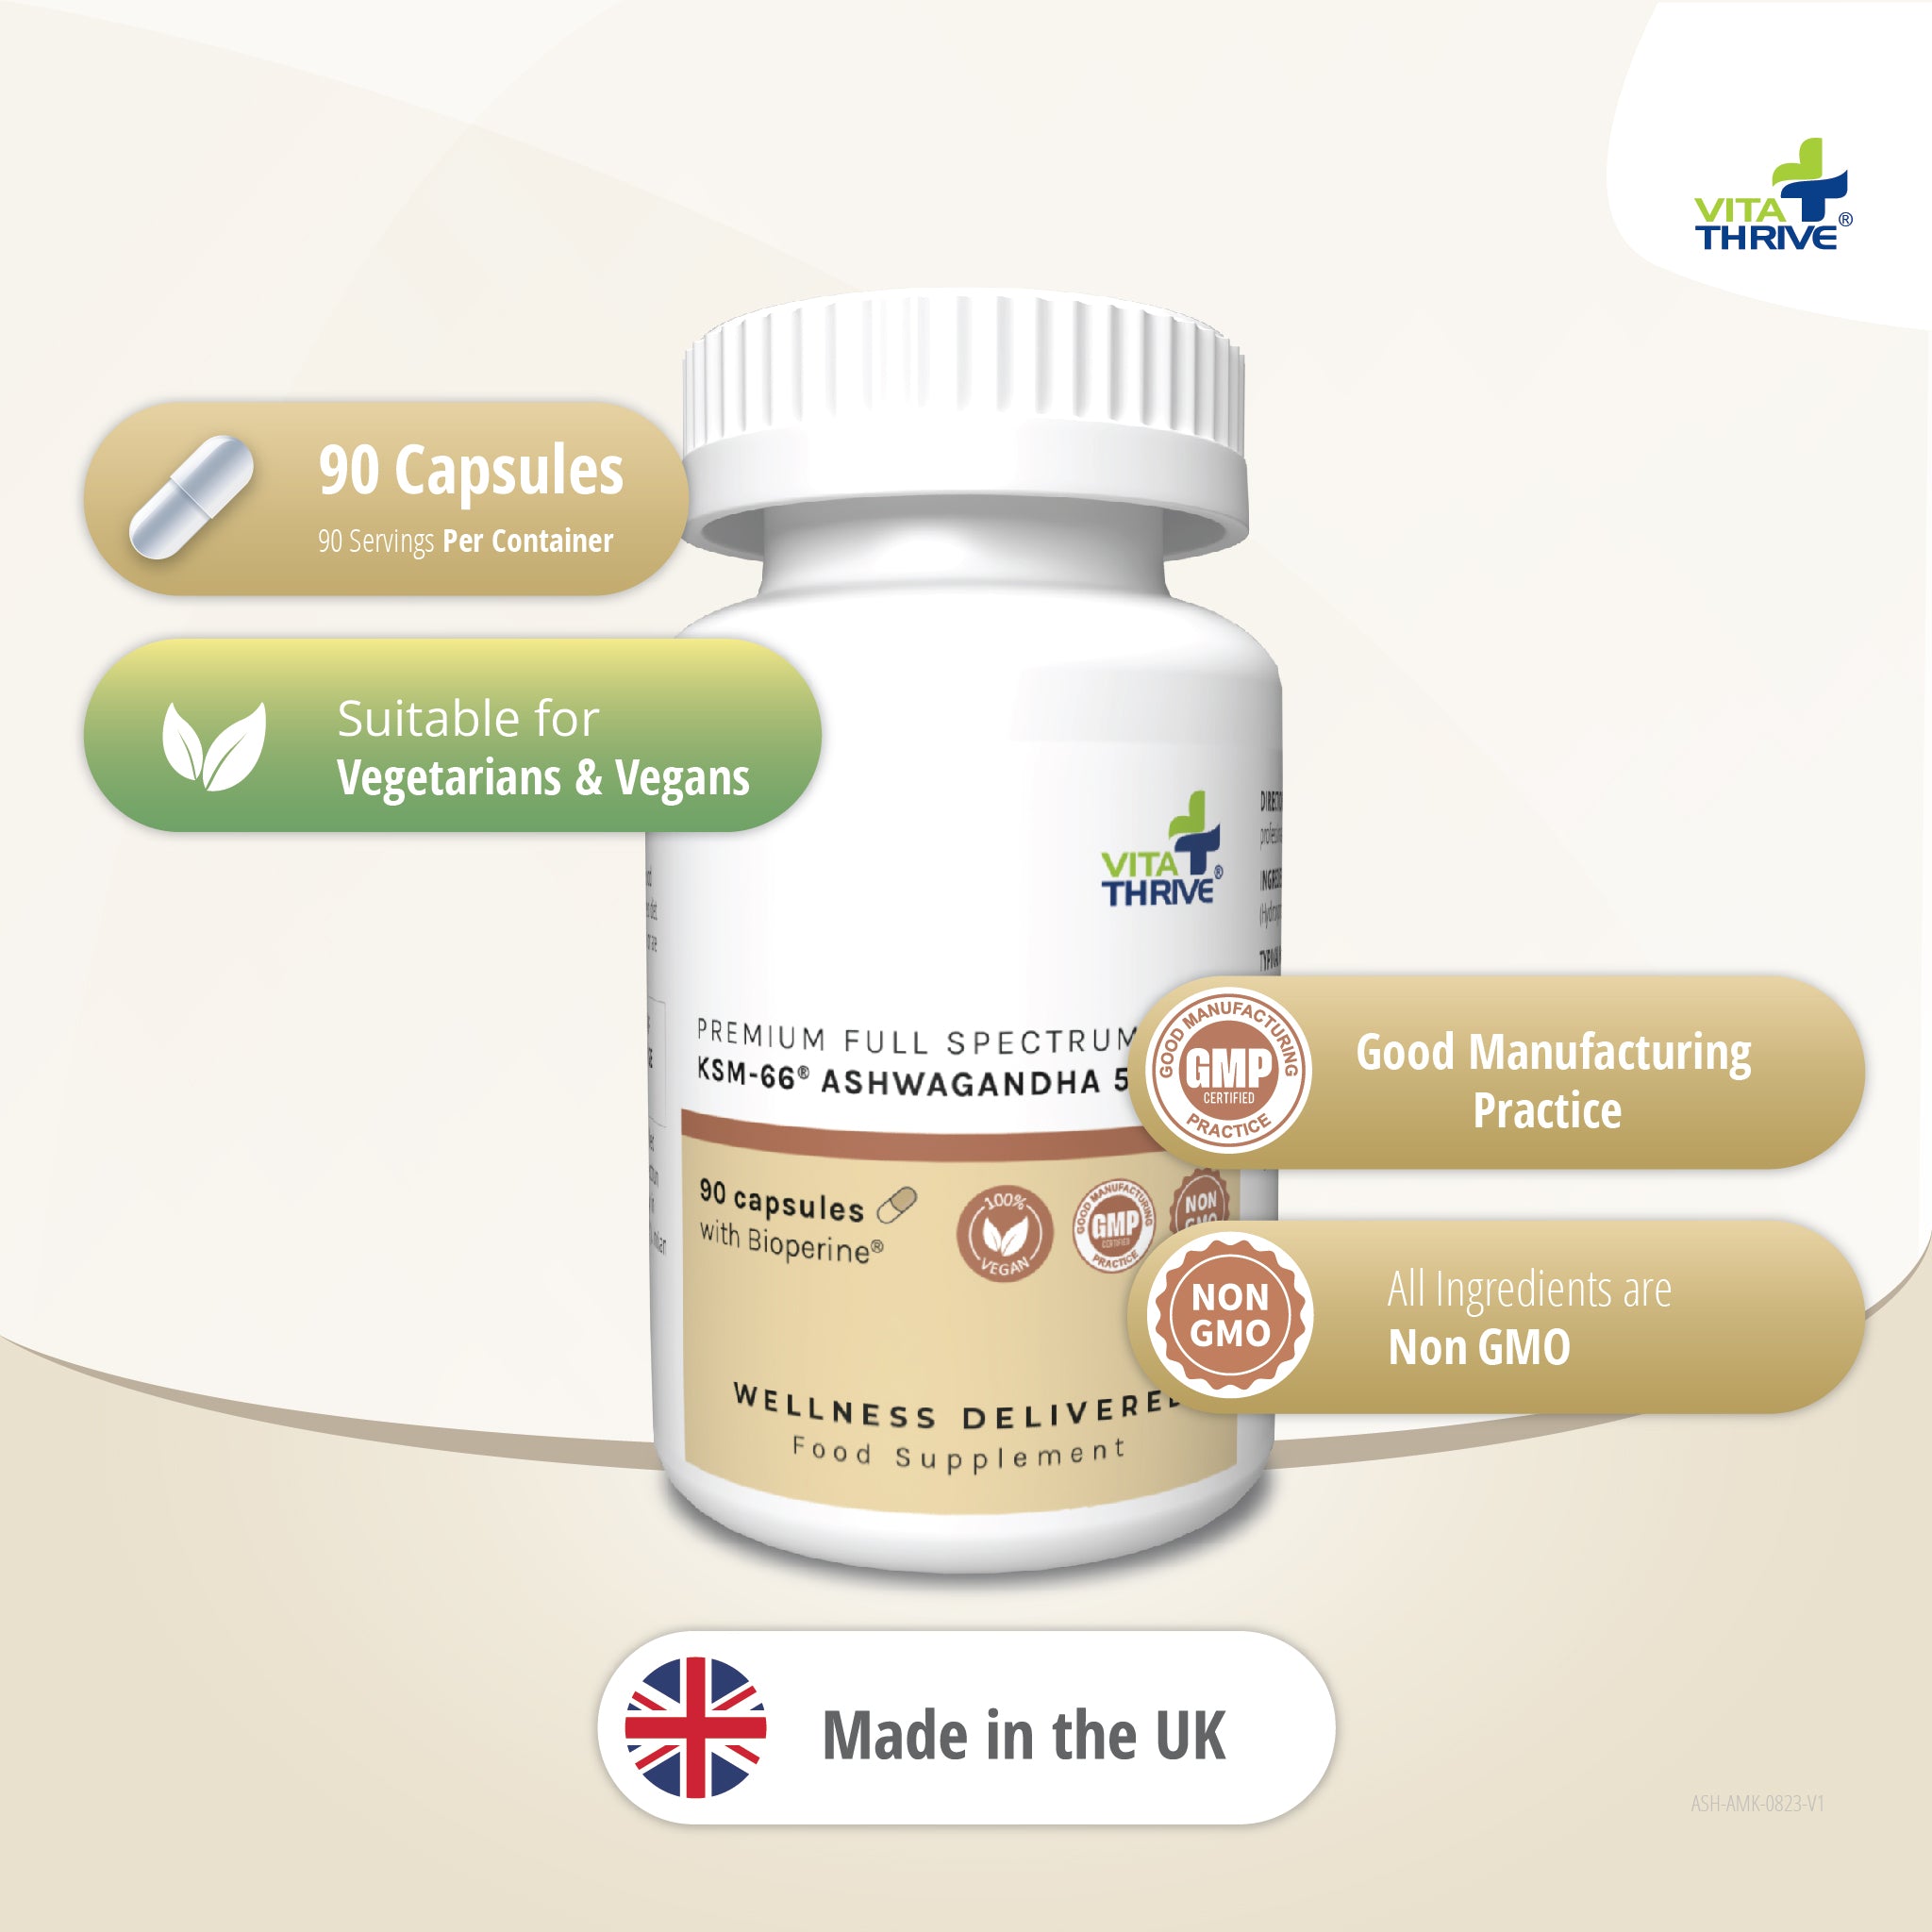 VitaThrive® KSM-66® Ashwagandha 500mg with Bioperine® Capsules - 90 Count